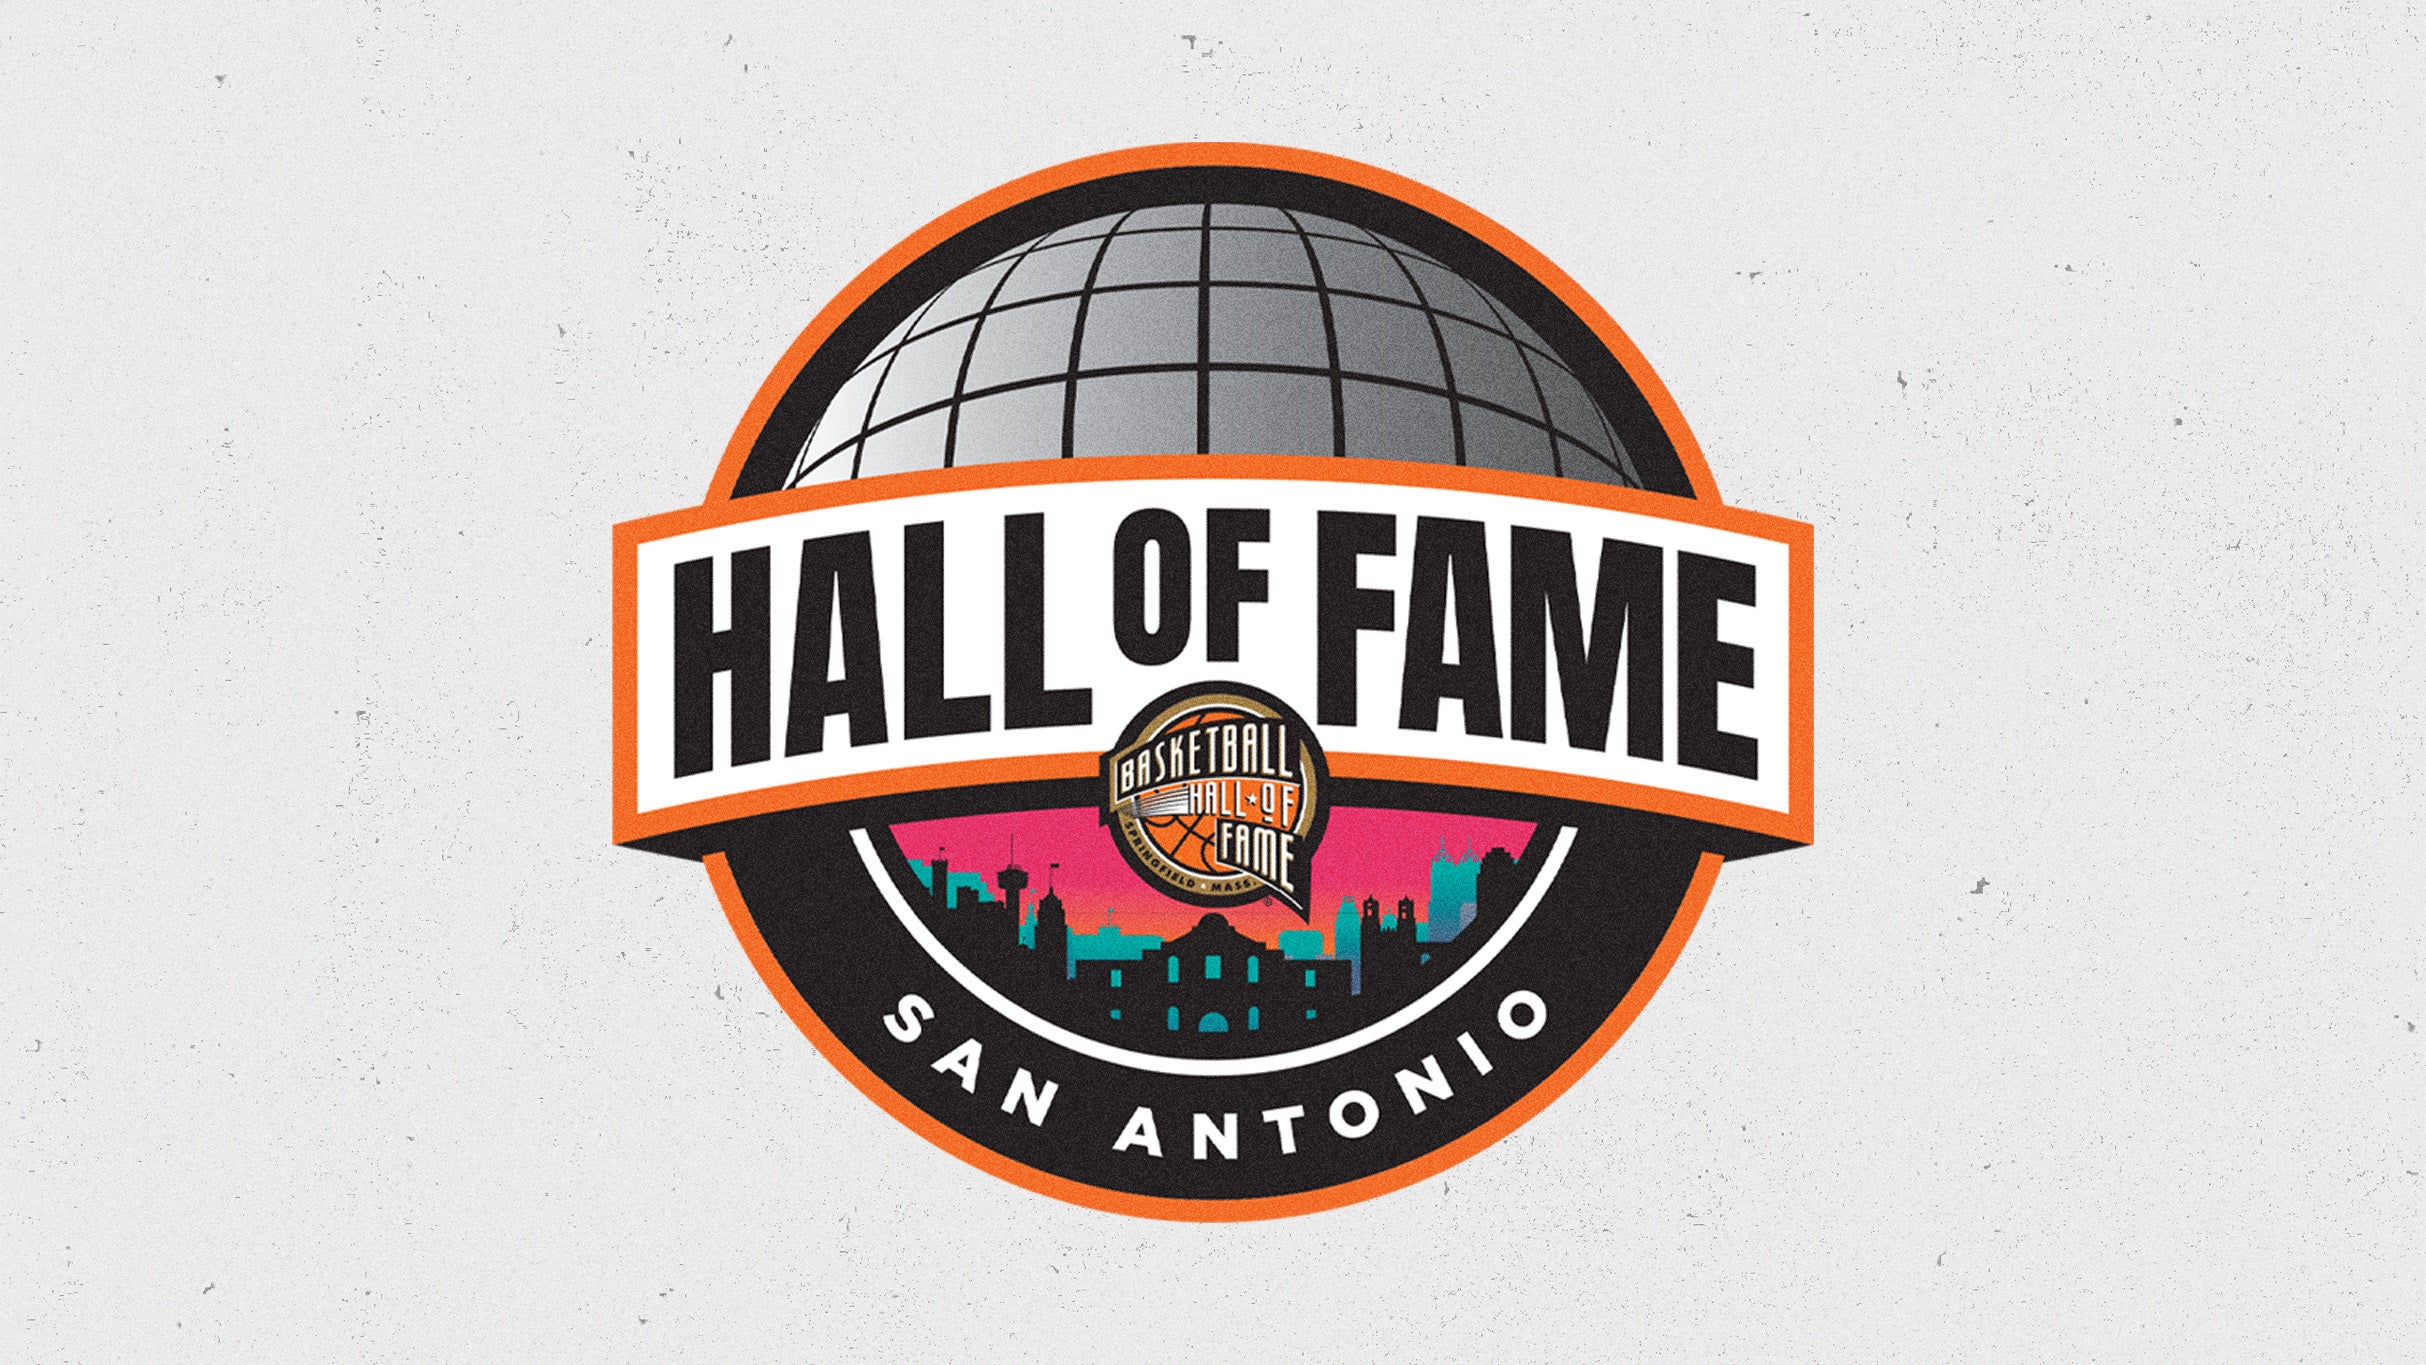 Naismith Hall of Fame Series &ndash; San Antonio presale information on freepresalepasswords.com